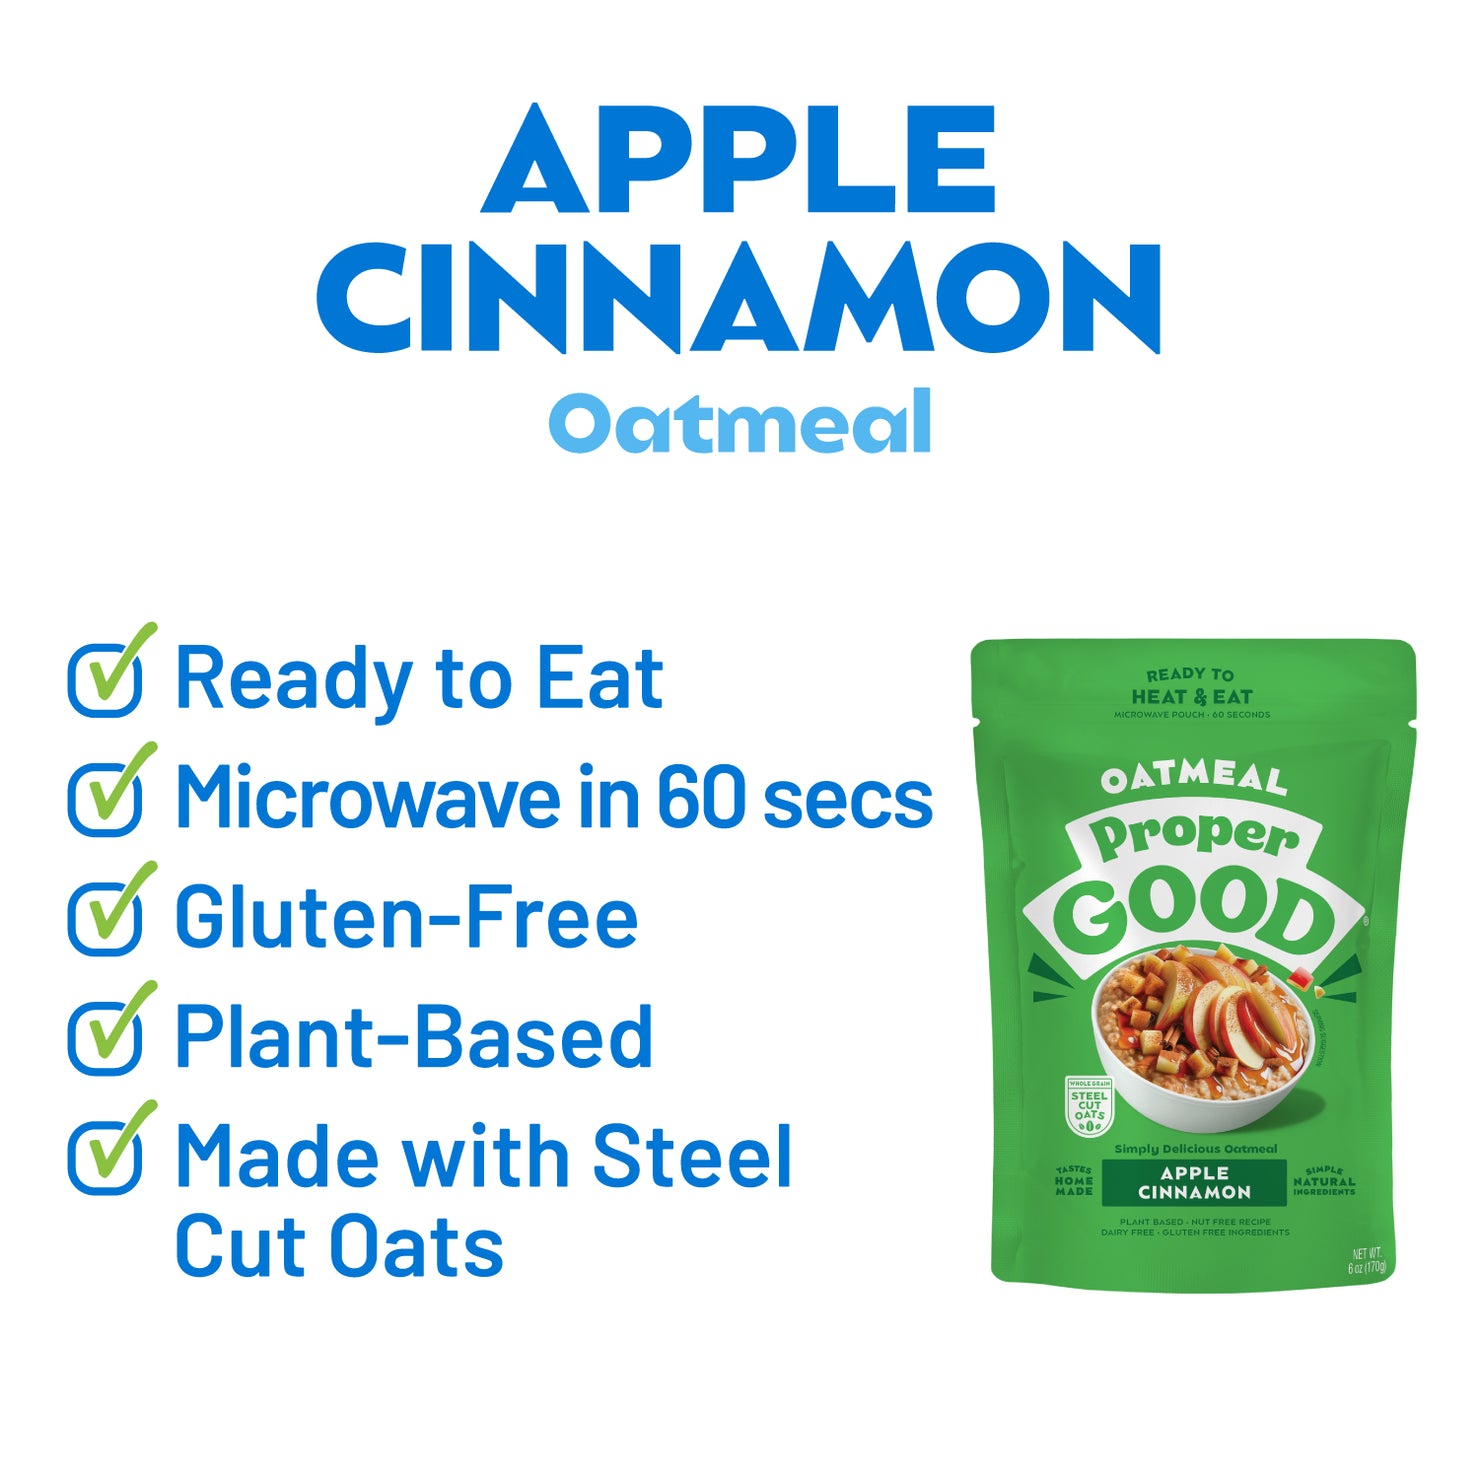 Apple Cinnamon Oatmeal Key Points - Eat Proper Good